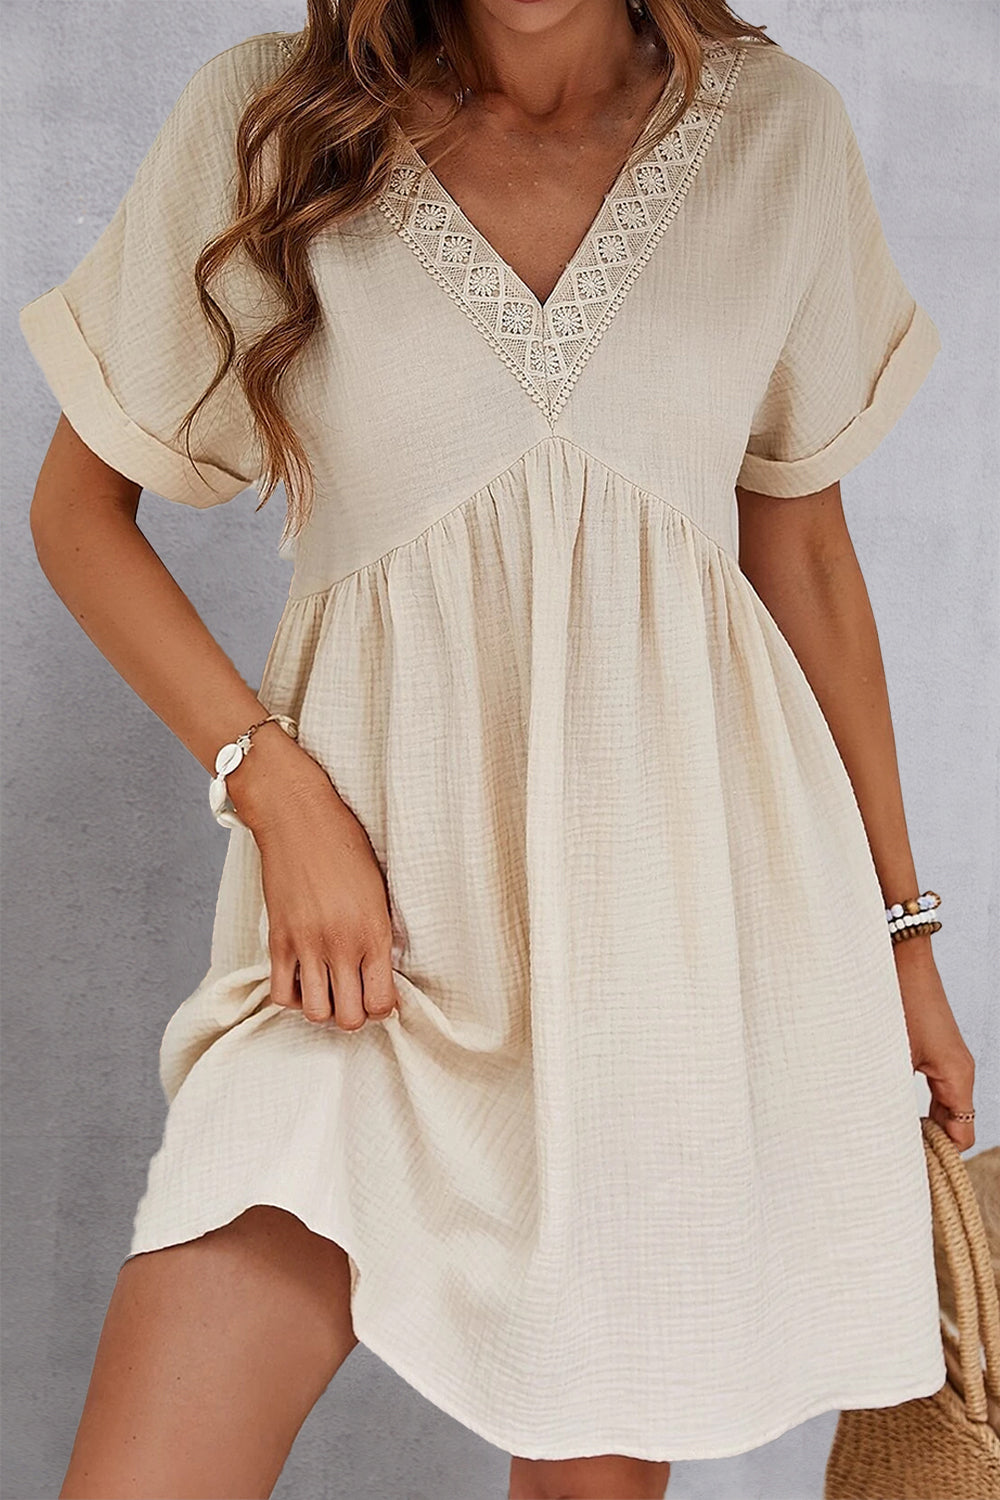 Casual V-Neck Short Sleeve Dress (2 Colors) Dress Krazy Heart Designs Boutique Cream S 